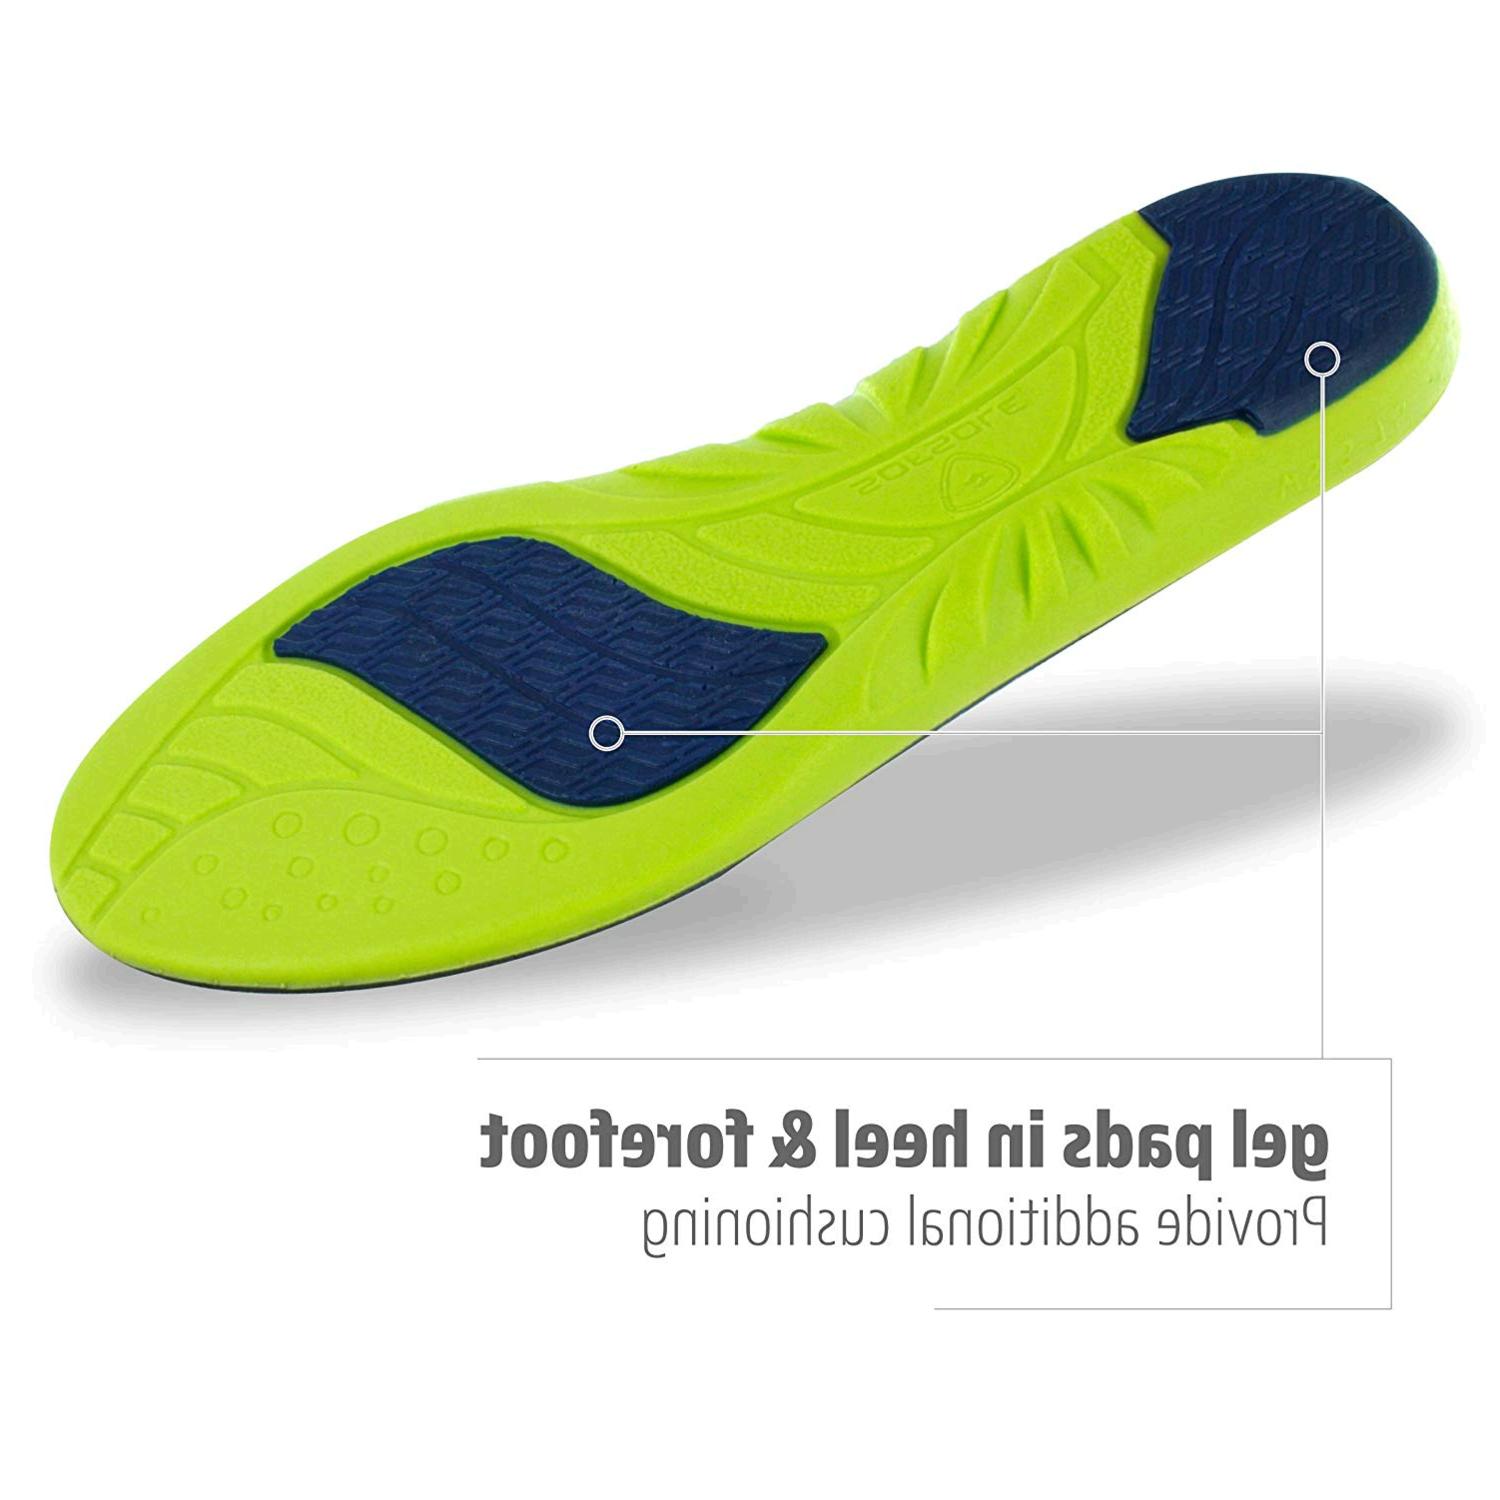 Sof Sole Insoles Men's Athlete Performance Full-Length Gel Shoe, Blue ...